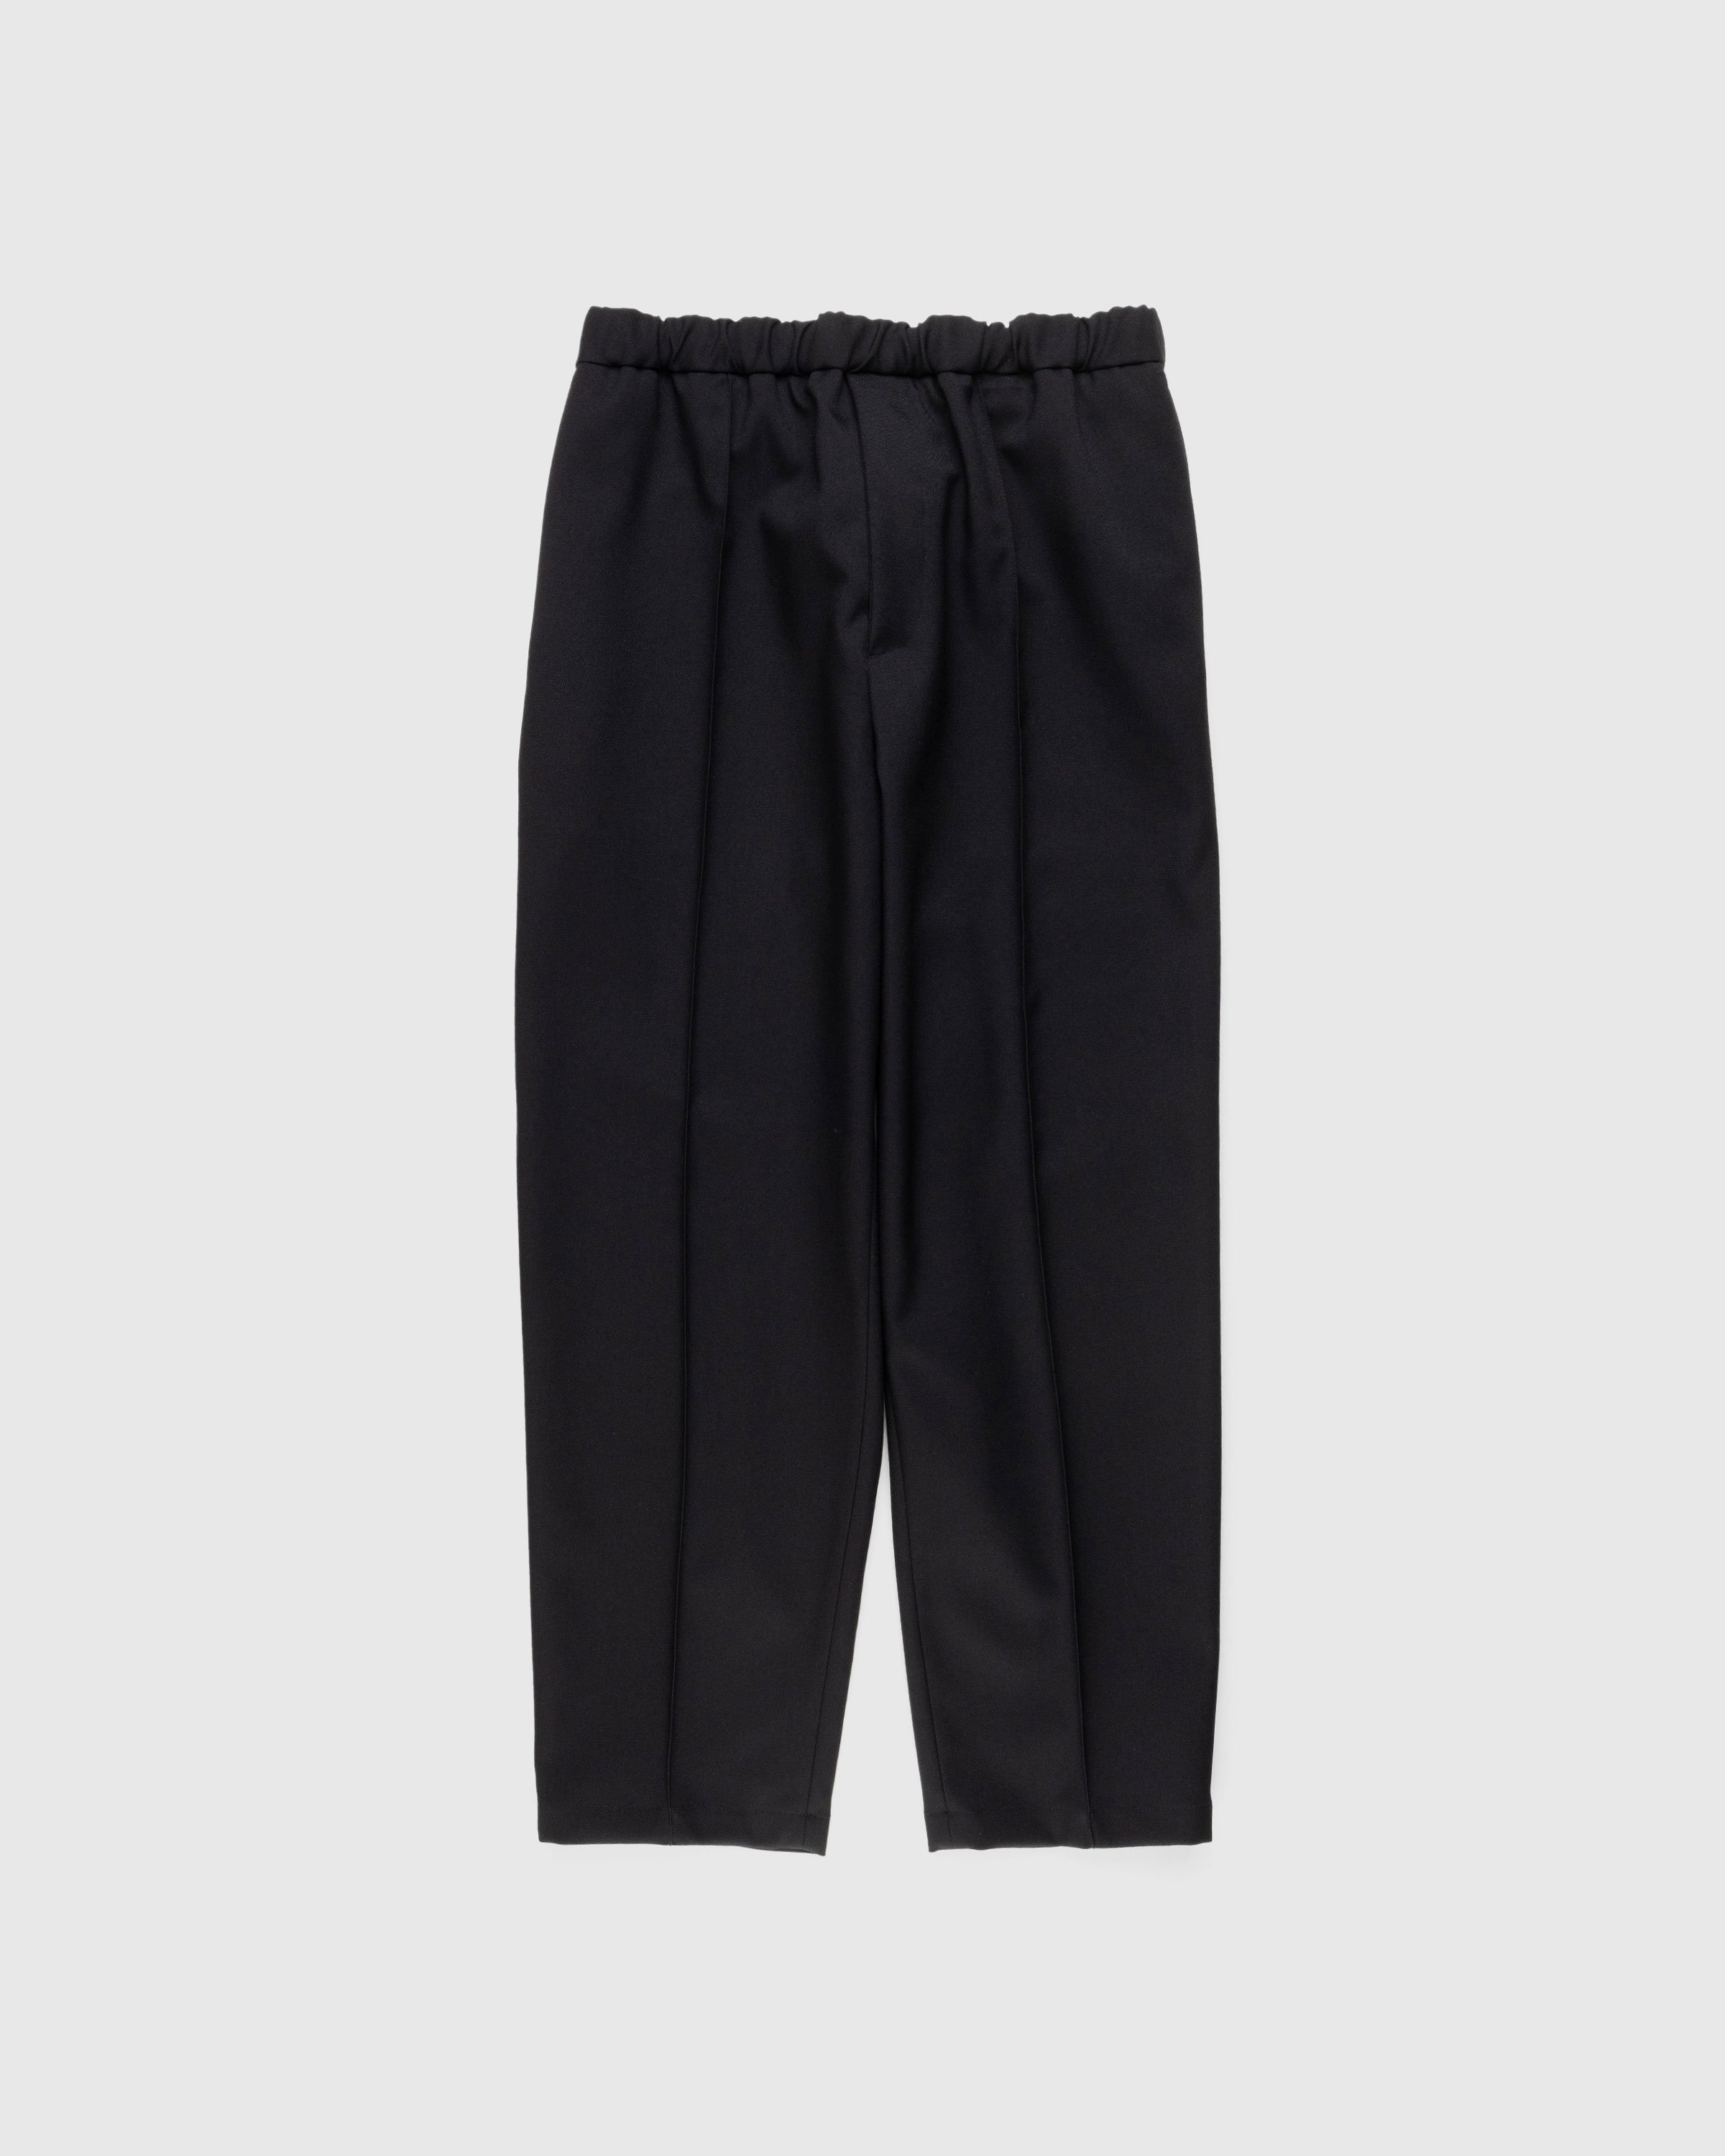 Jil Sander - Trouser D 09 AW 20 - Clothing - Black - Image 1